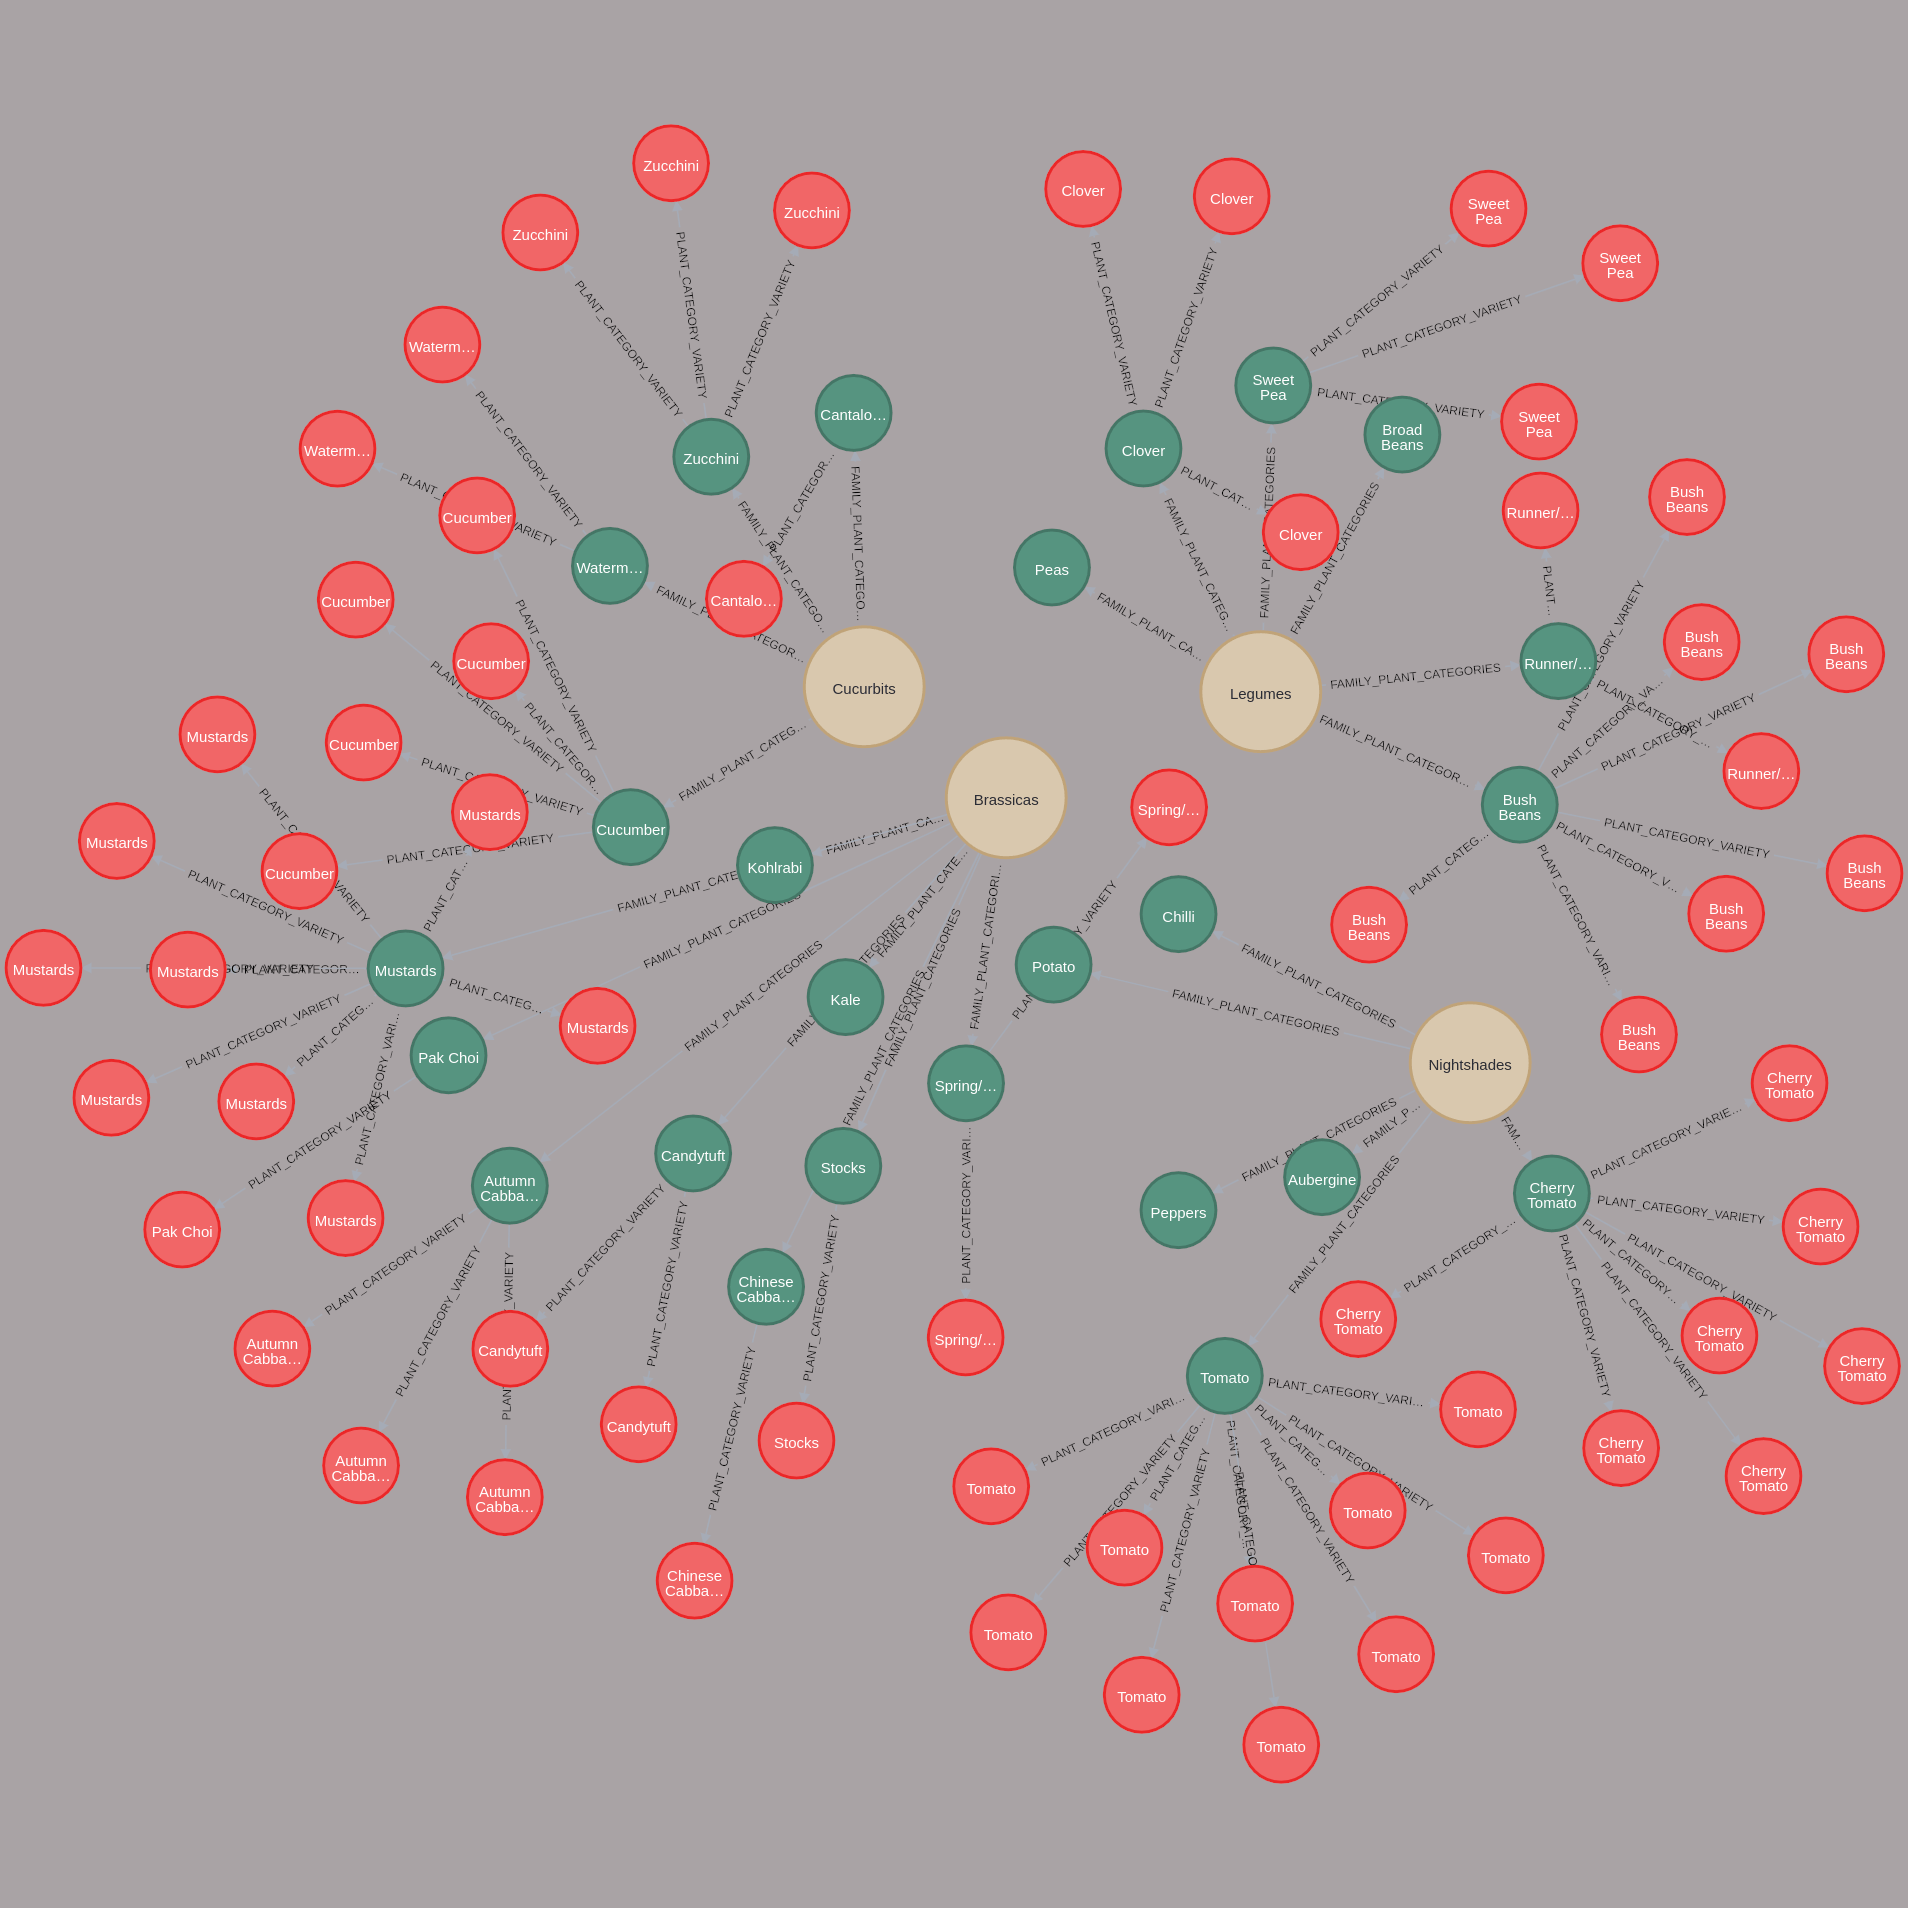 Neo4J nodes from the garden planner database.